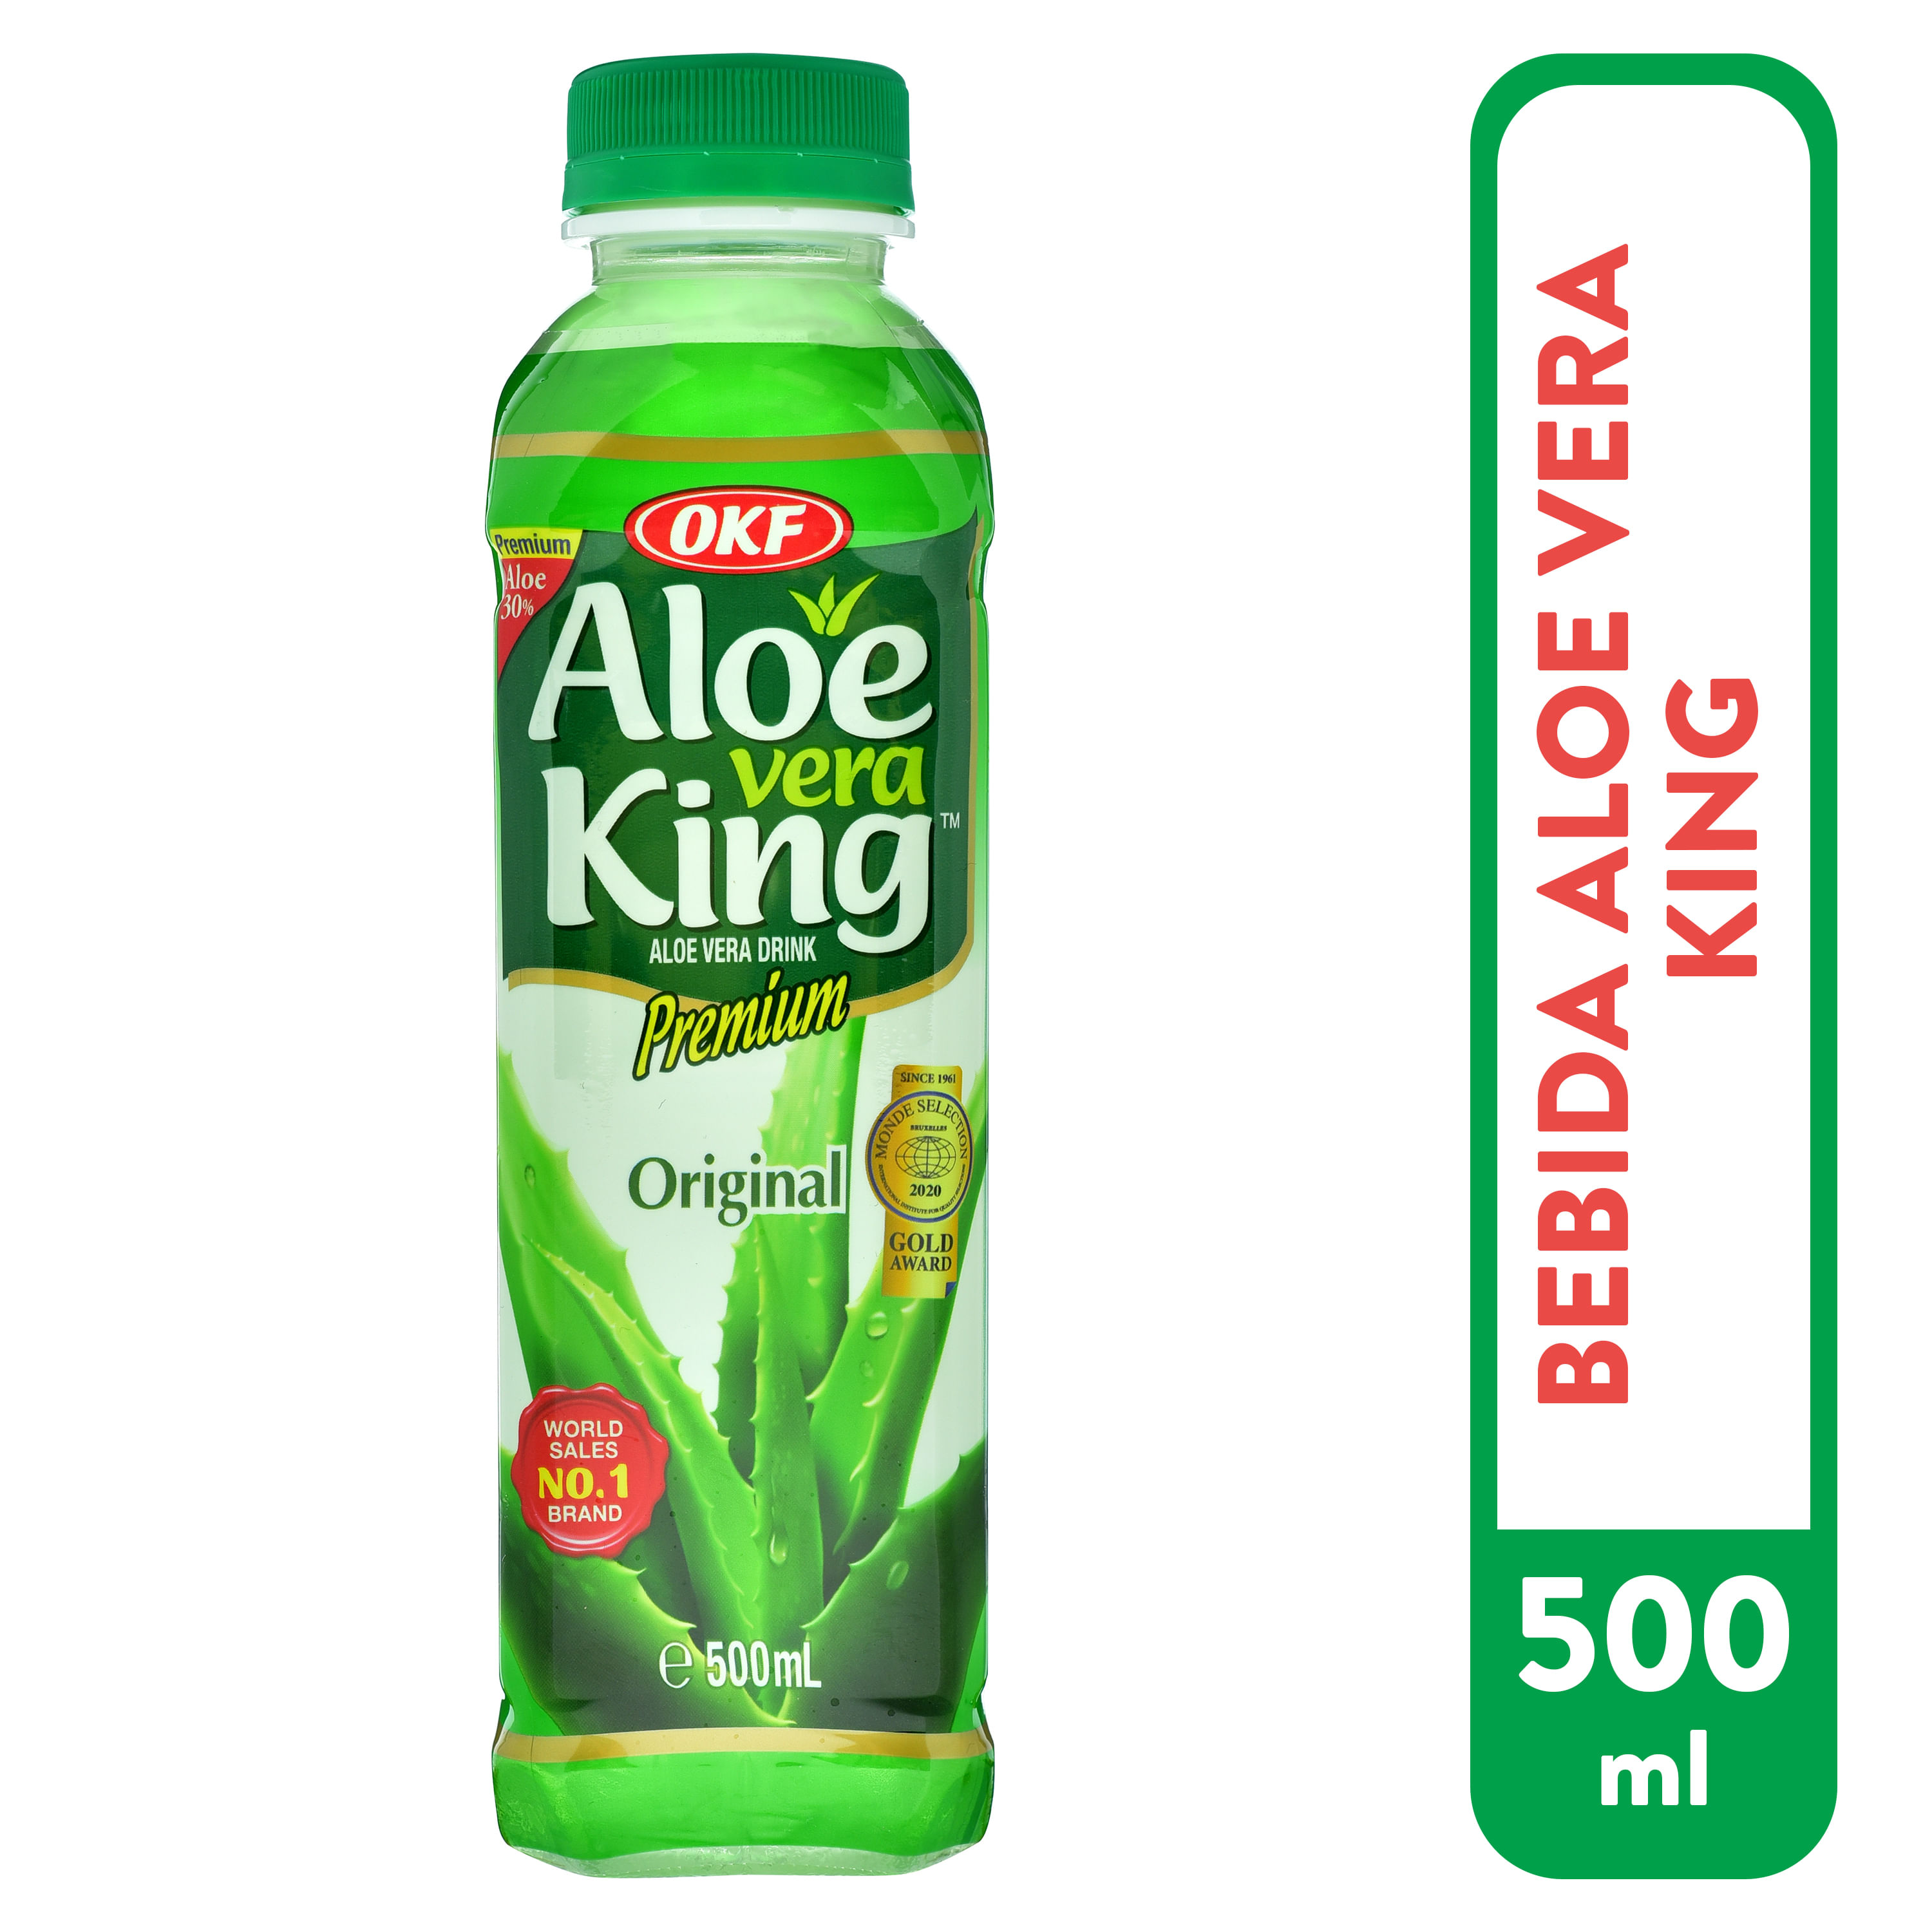 Comprar Bebida Okf Aloe Vera King 500ml Walmart Costa Rica 2472